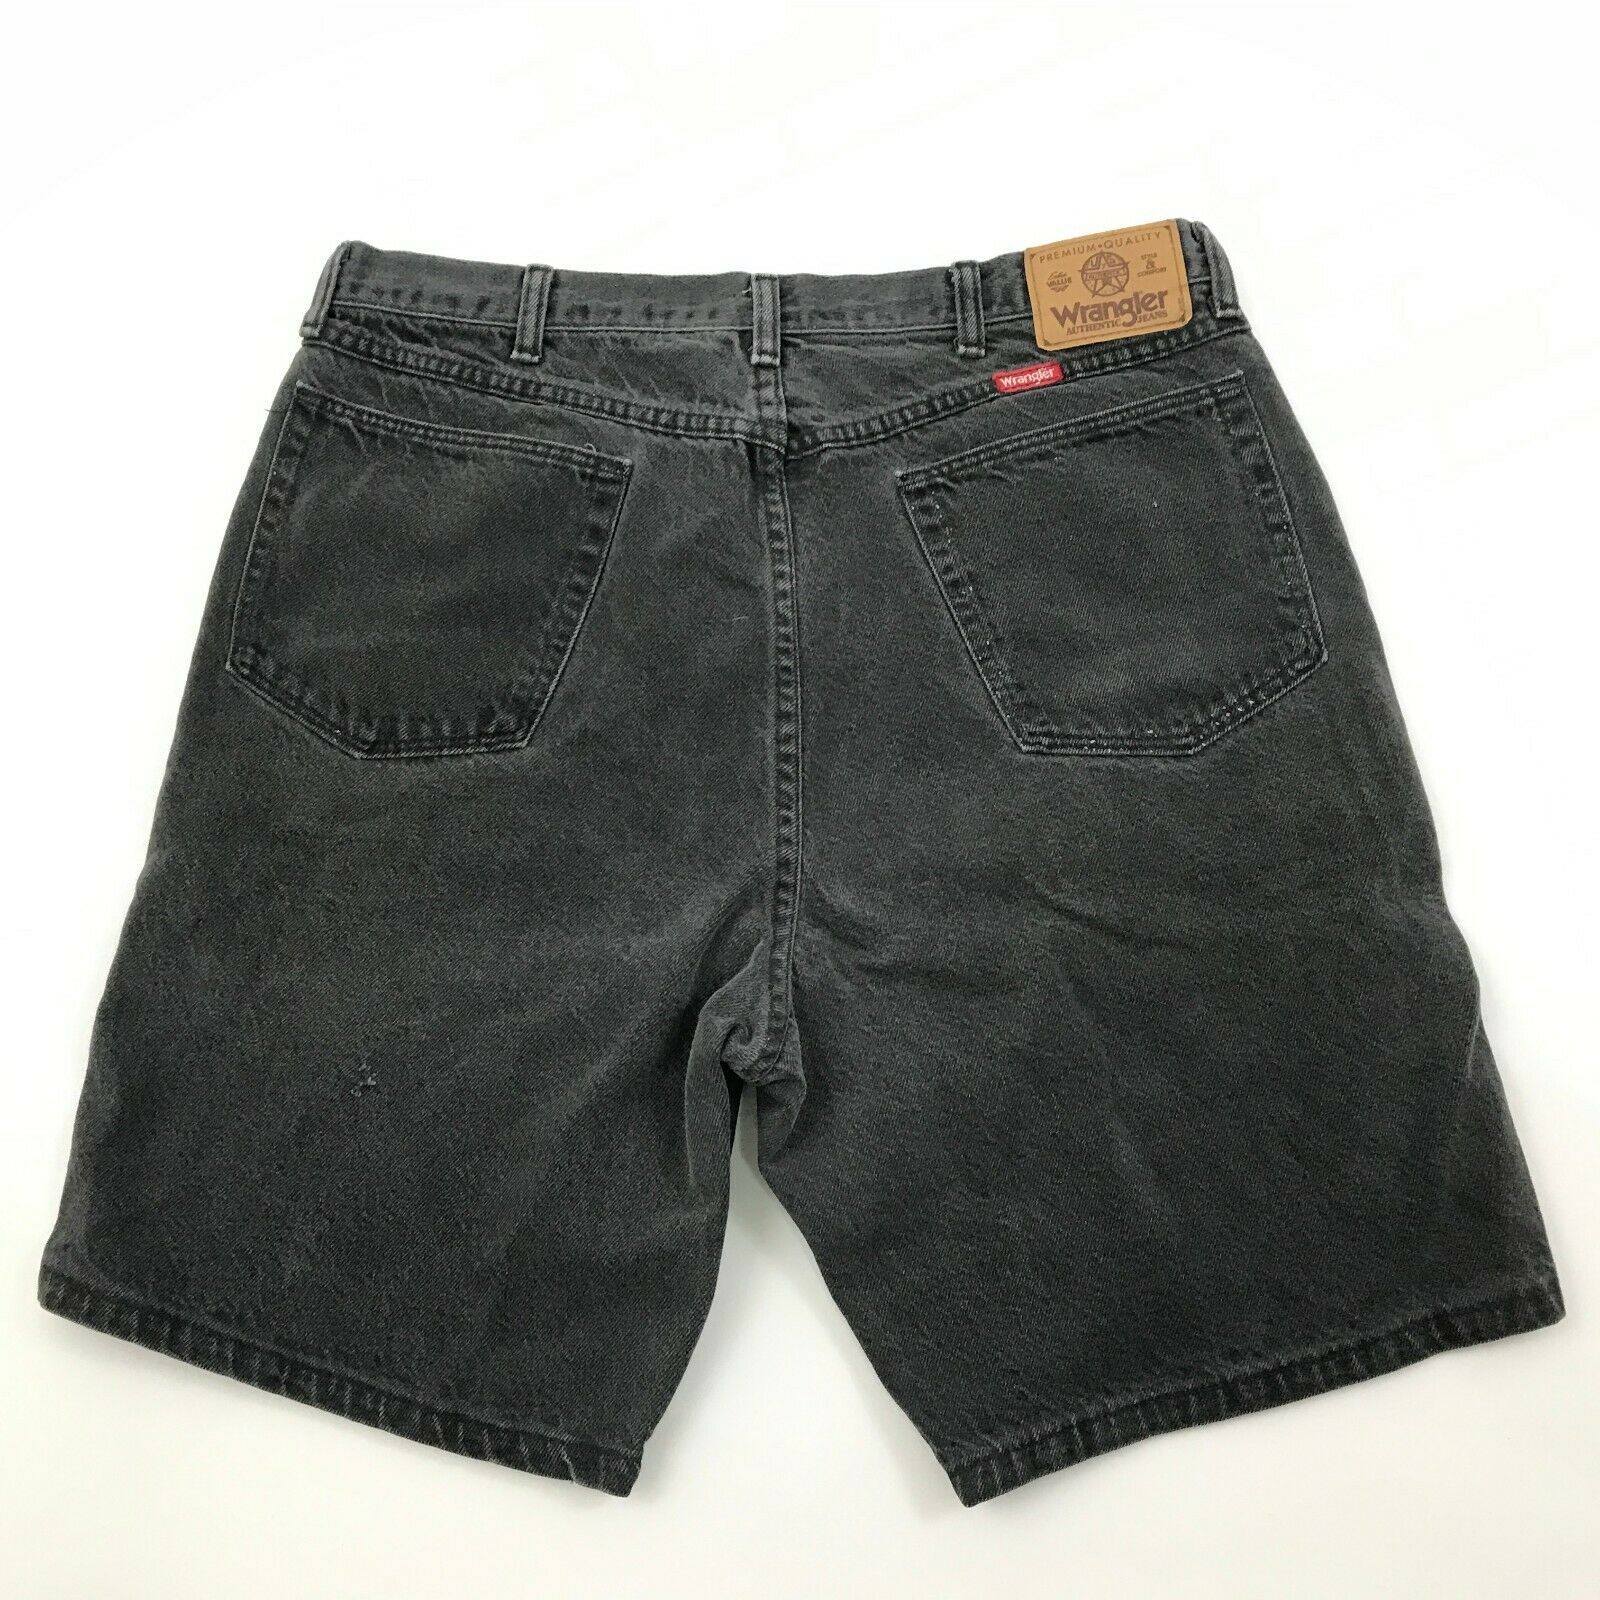 VINTAGE Wrangler Black Jean Shorts MADE IN USA Premium Denim Jorts Zip ...